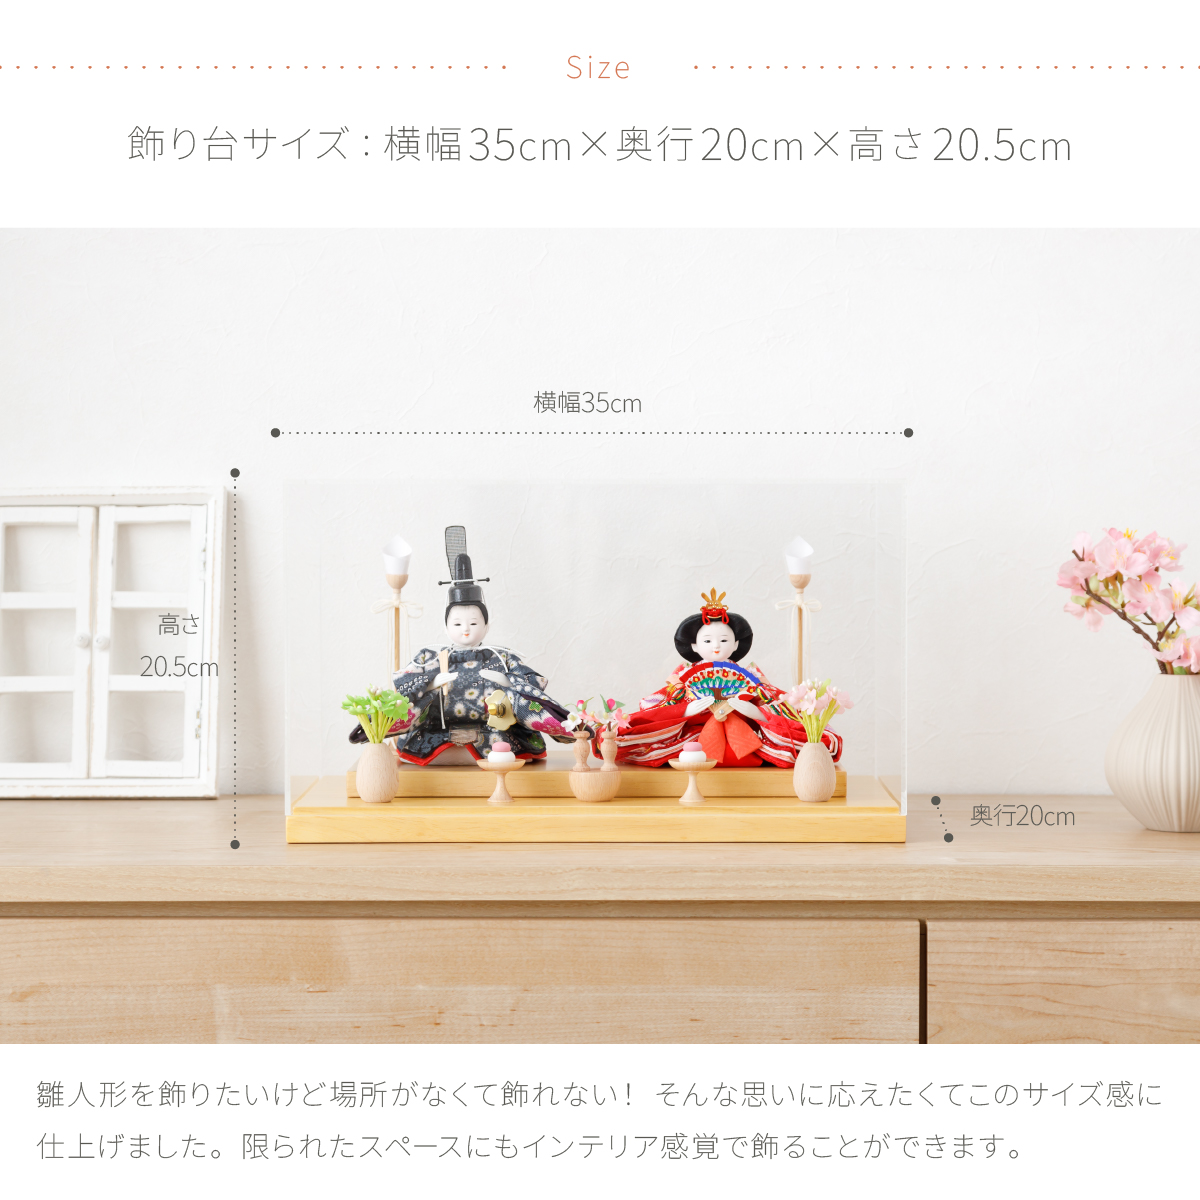 . doll case decoration compact stylish .. sama hinaningyou lovely .....SakuraLiru Sakura liru is possible to choose 6 kind. costume acrylic fiber case background design none 